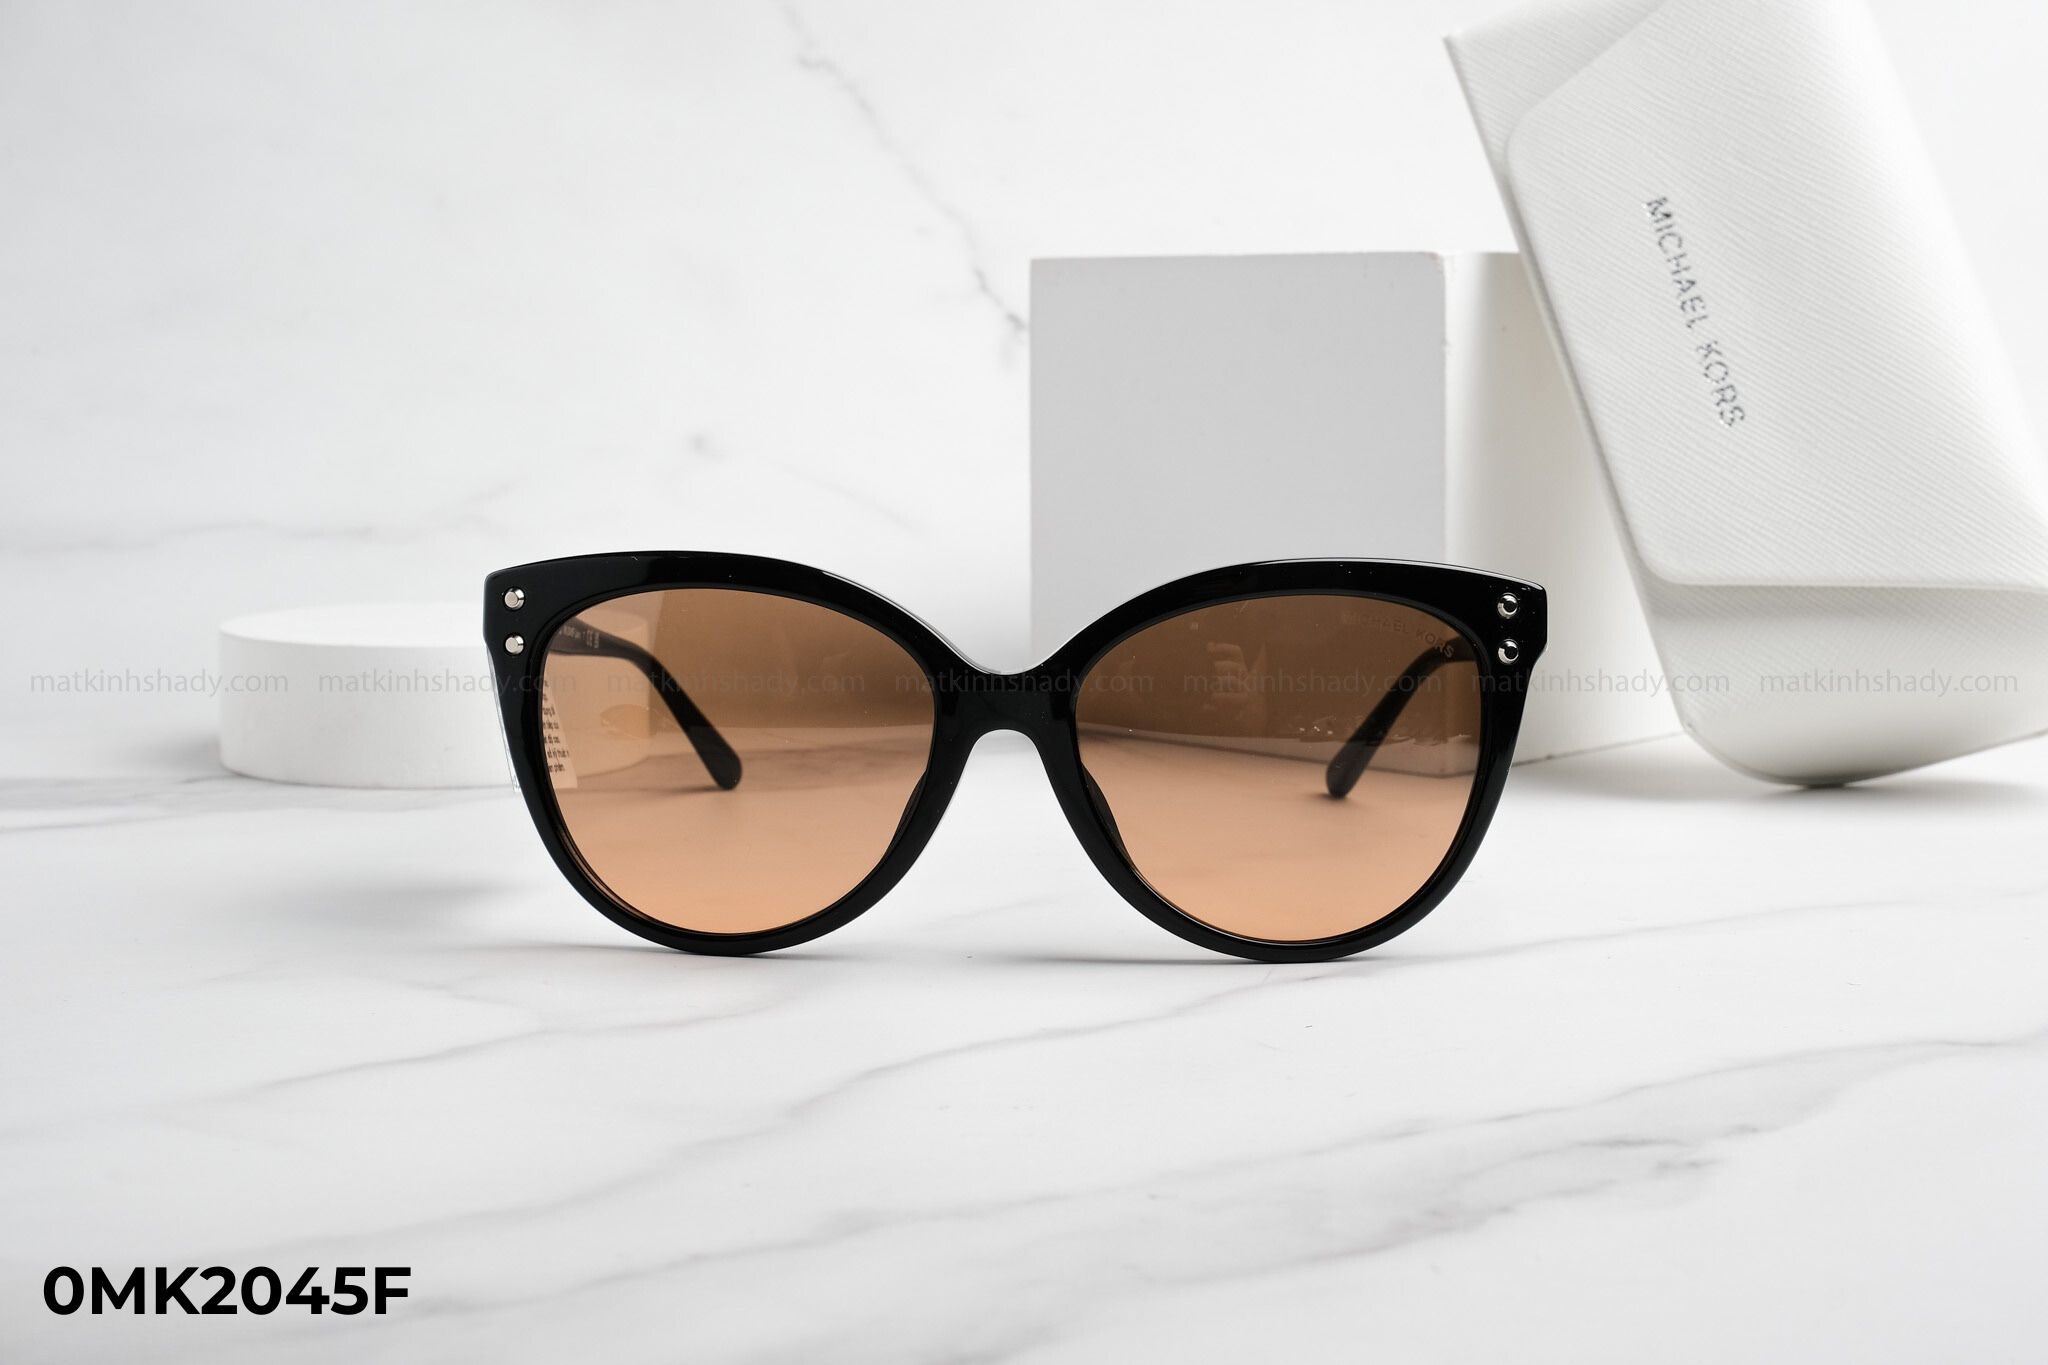  Michael Kors Eyewear - Sunglasses - 0MK2045 